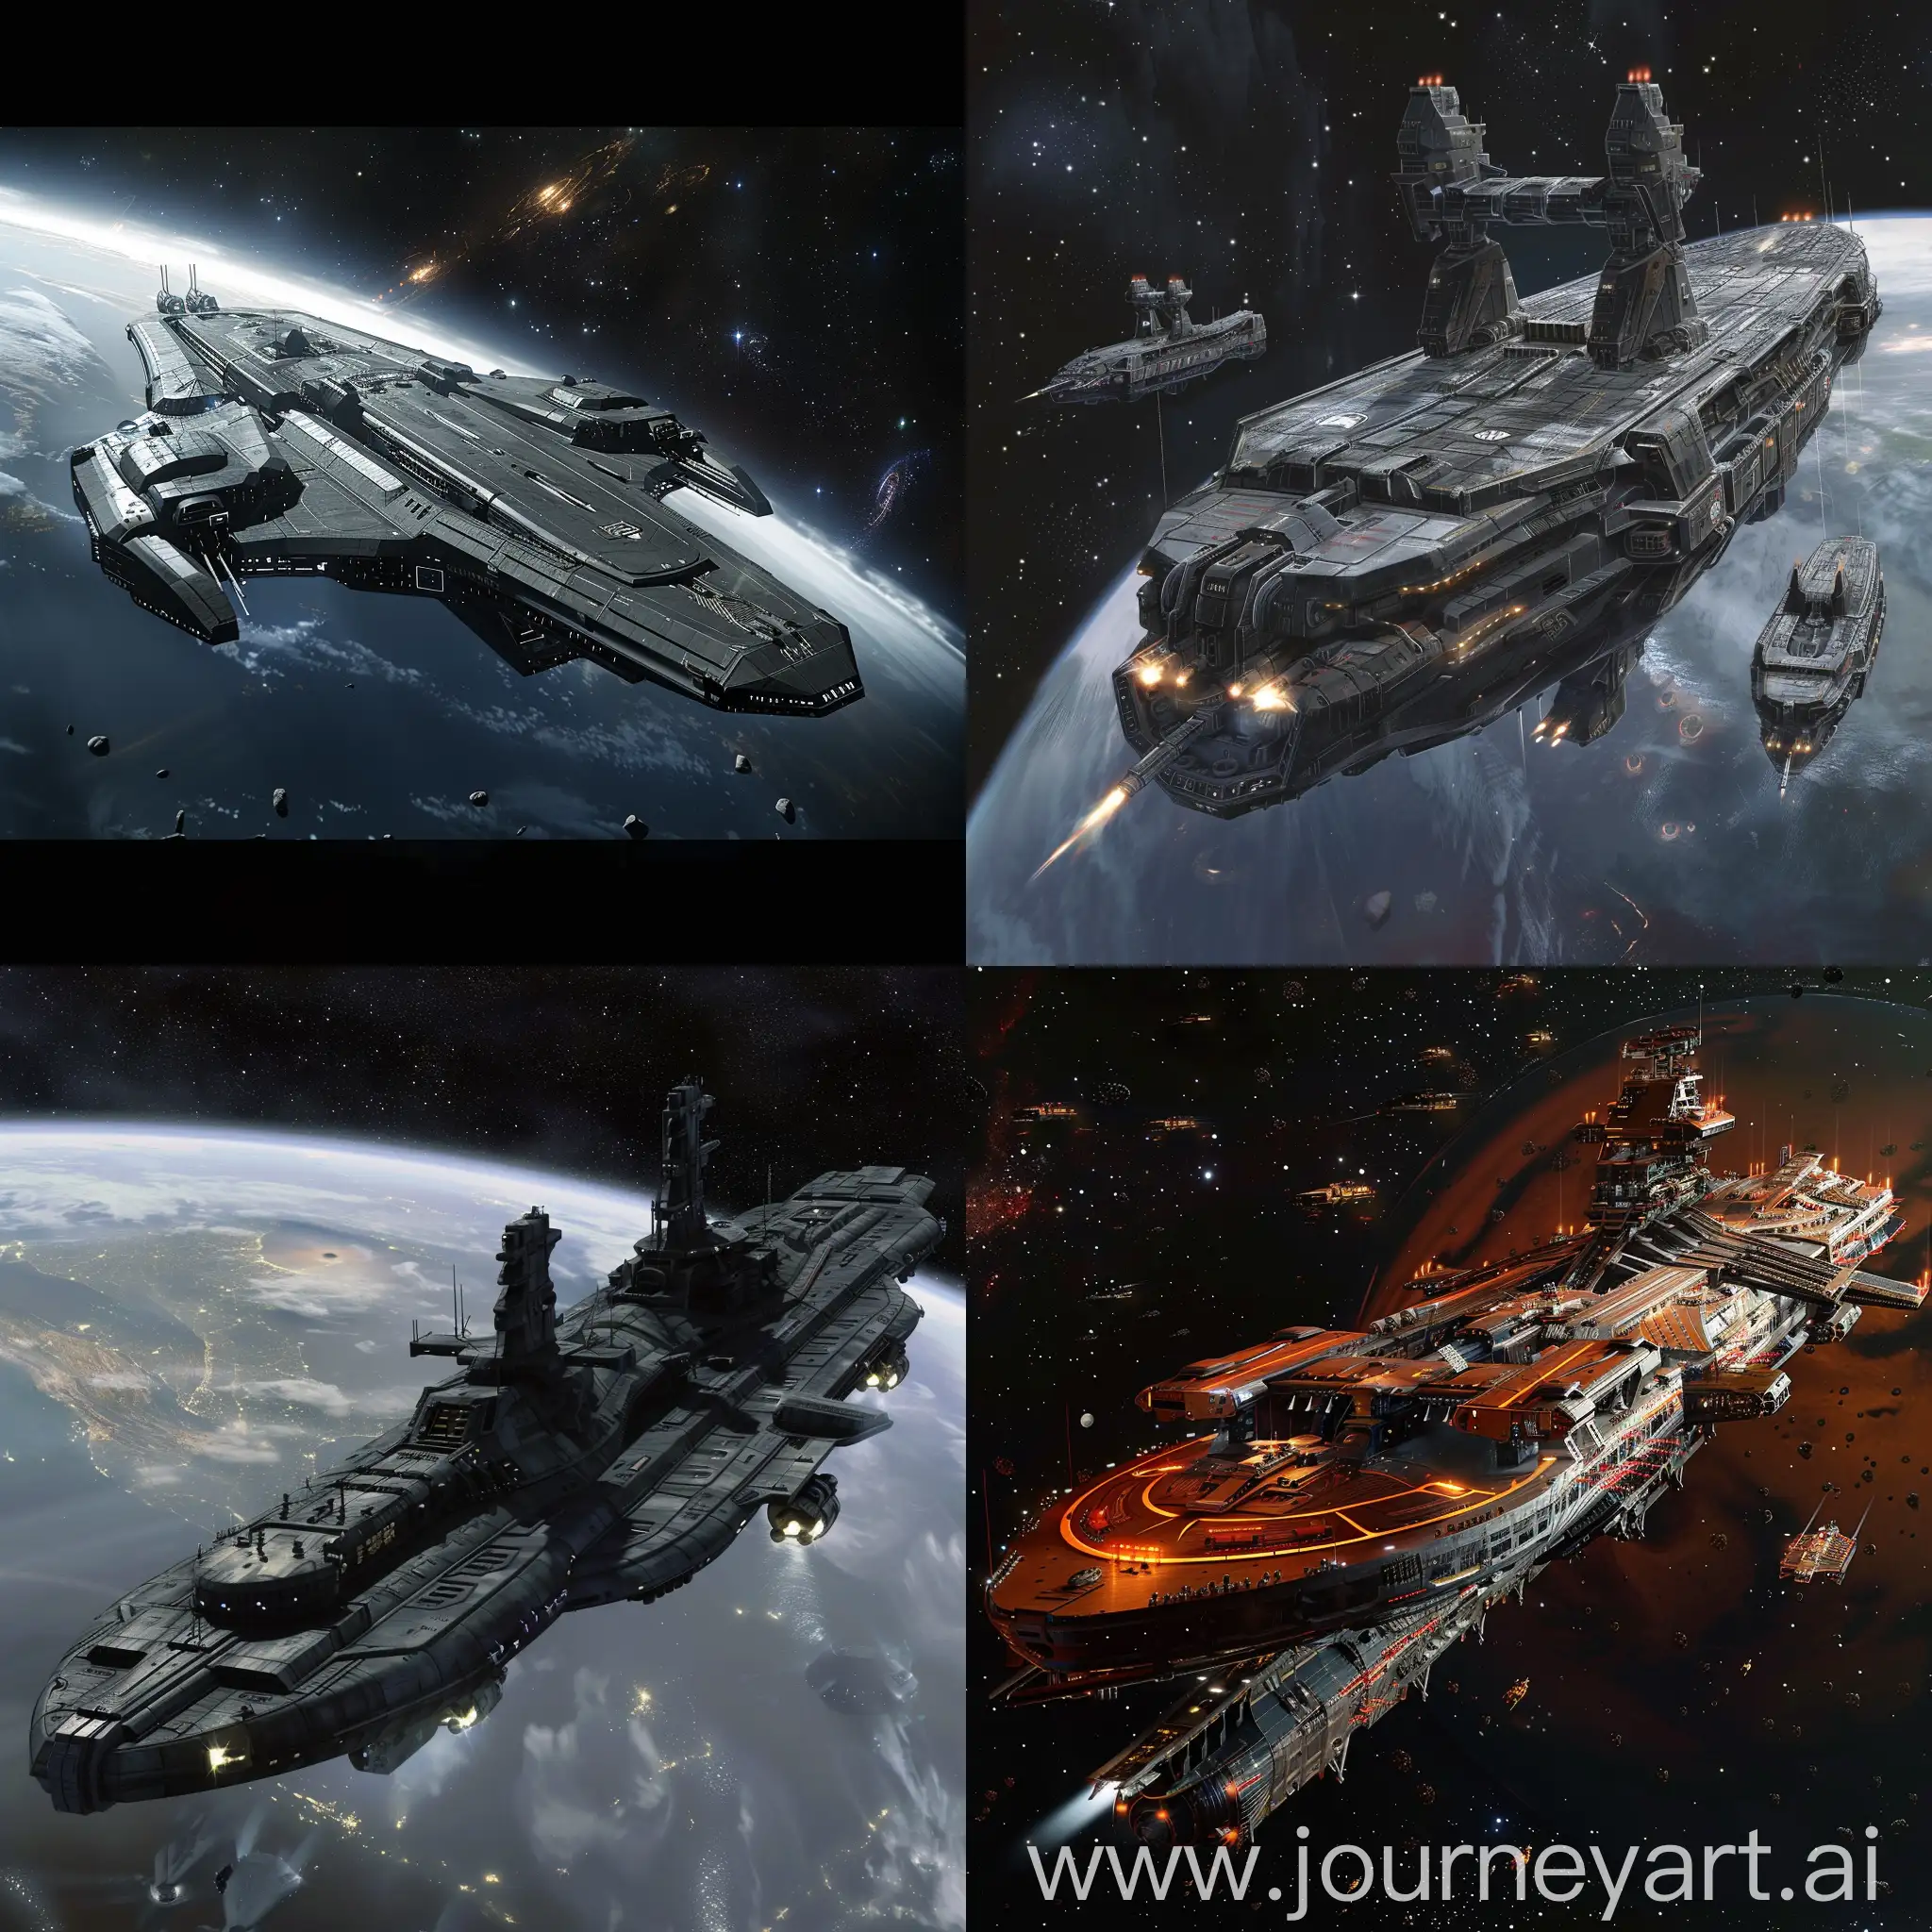 Interstellar-PlanetaryScale-Warship-in-Deep-Space